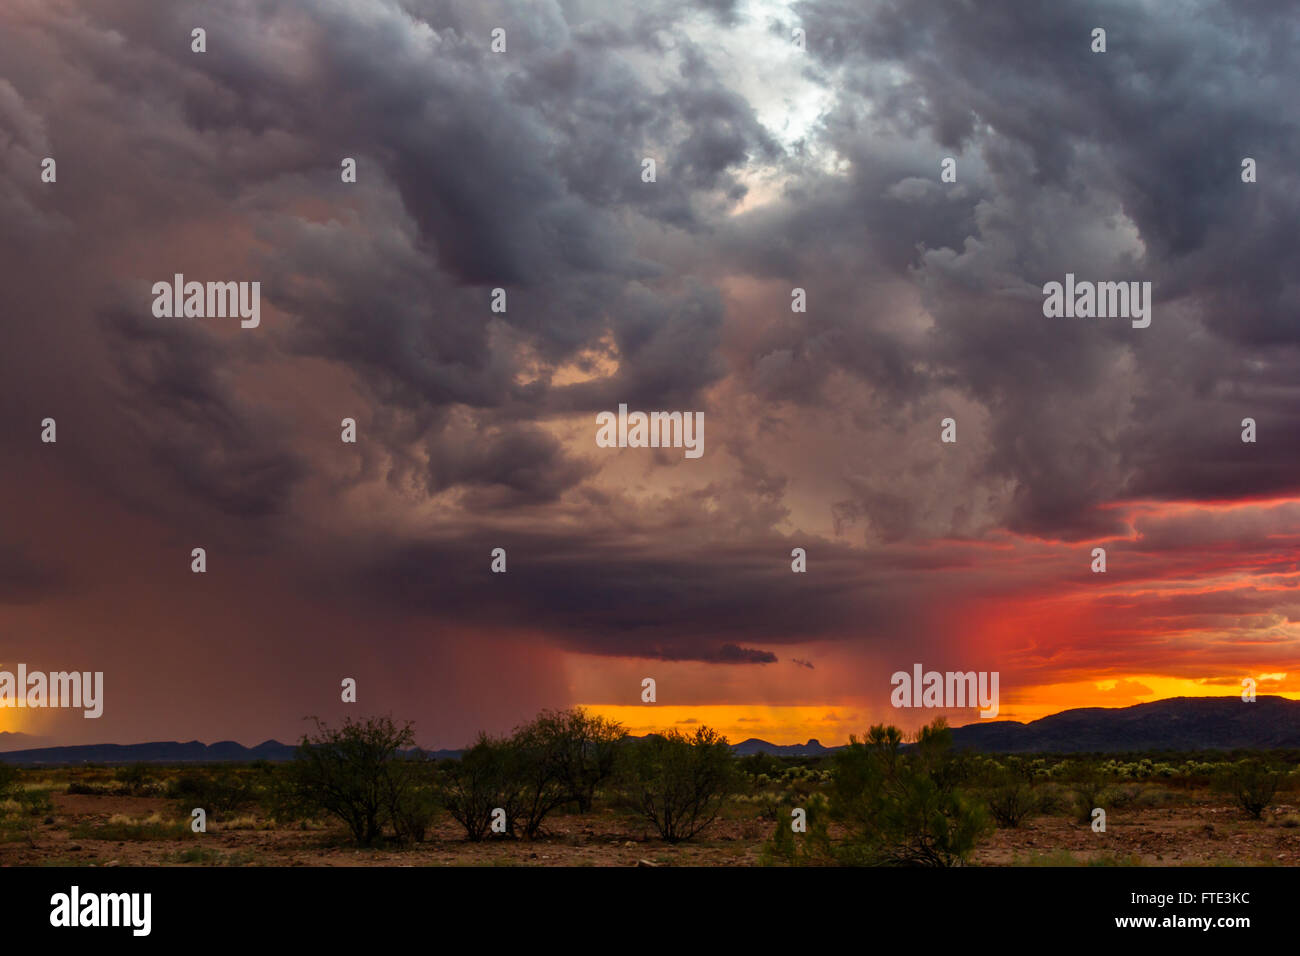 A monsoon season storm with dramatic clouds and sunset sky in the desert near Phoenix, Arizona, USA Stock Photo